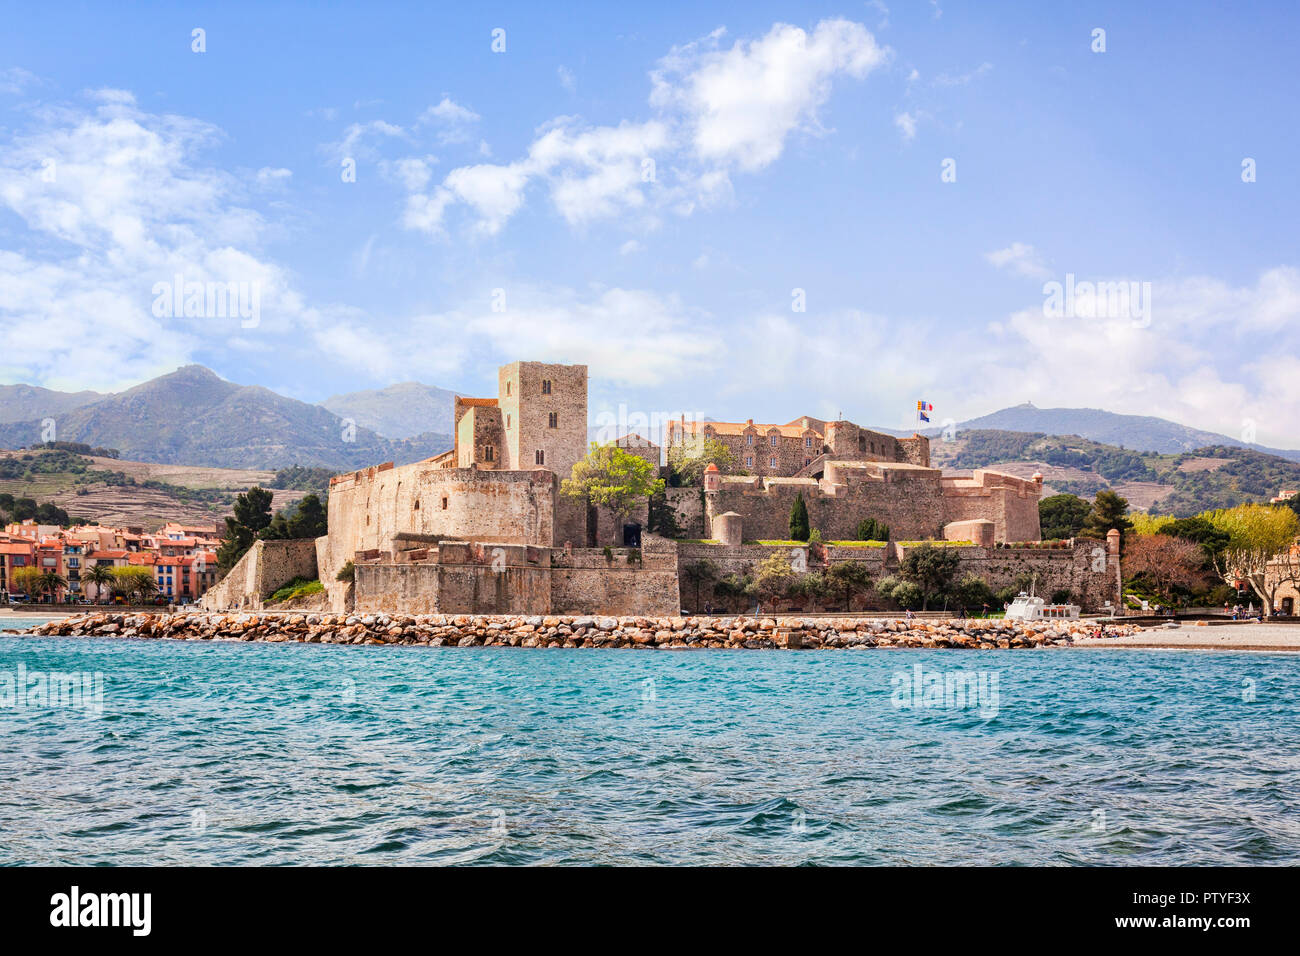 El castillo real, Collioure, Languedoc-Roussillon, Pirineos Orientales, Francia. Foto de stock